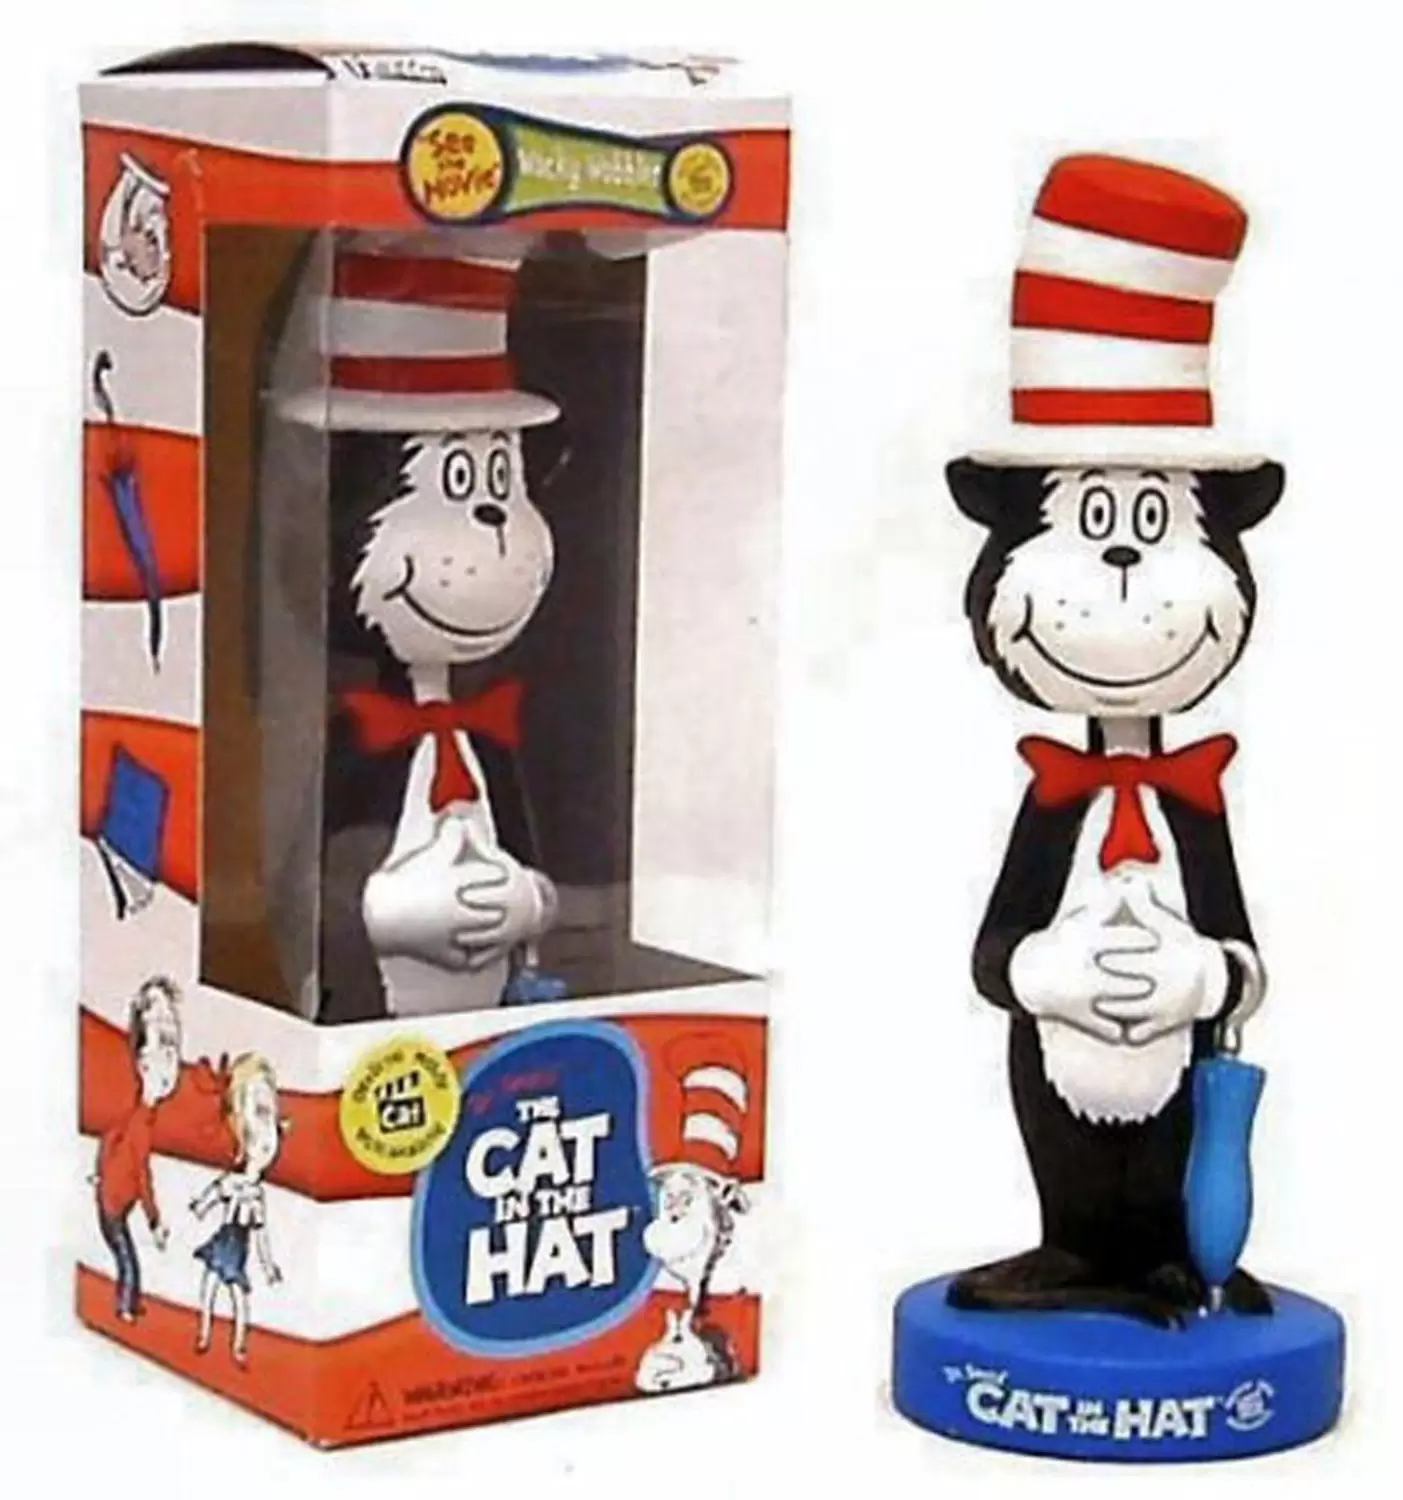 Wacky Wobbler Cartoons - The Cat In the Hat - The Cat